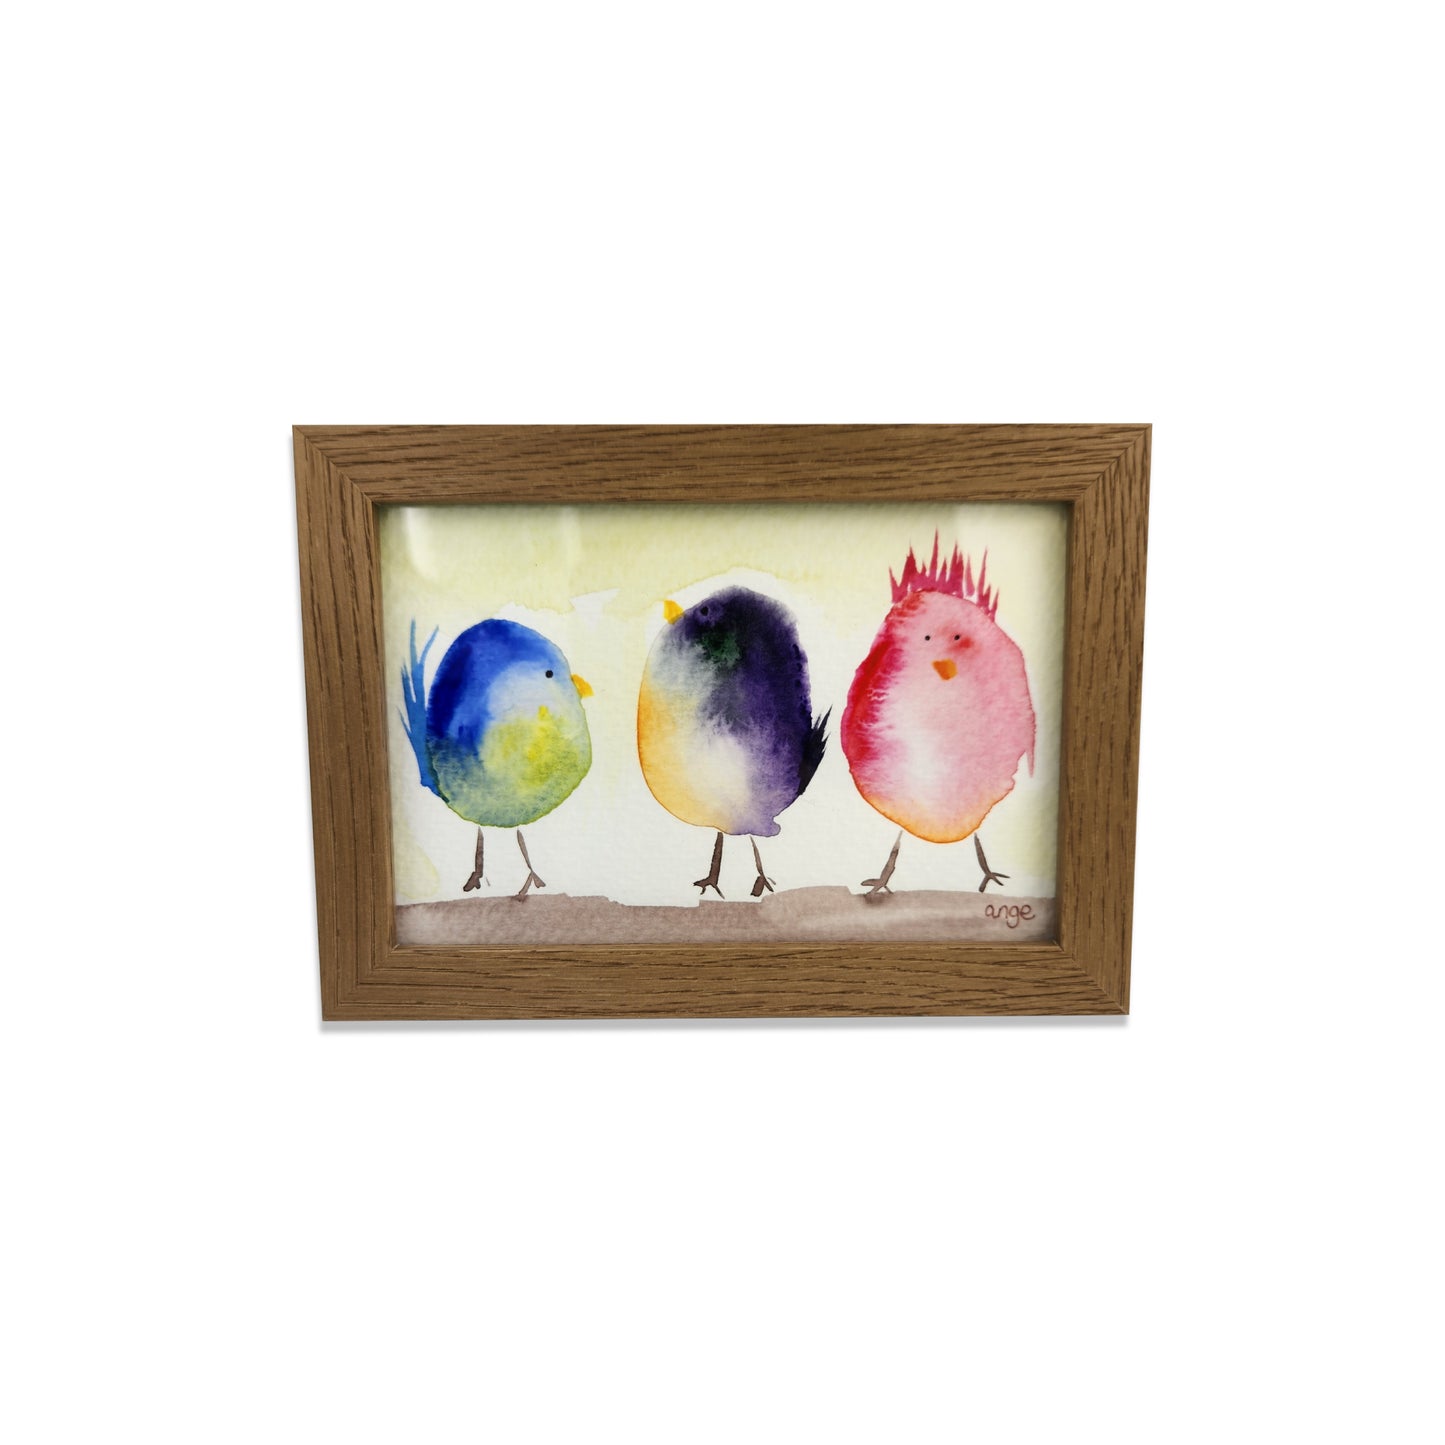 Angelica Goodwin Artwork for Animals Original Watercolor Painting - Birds